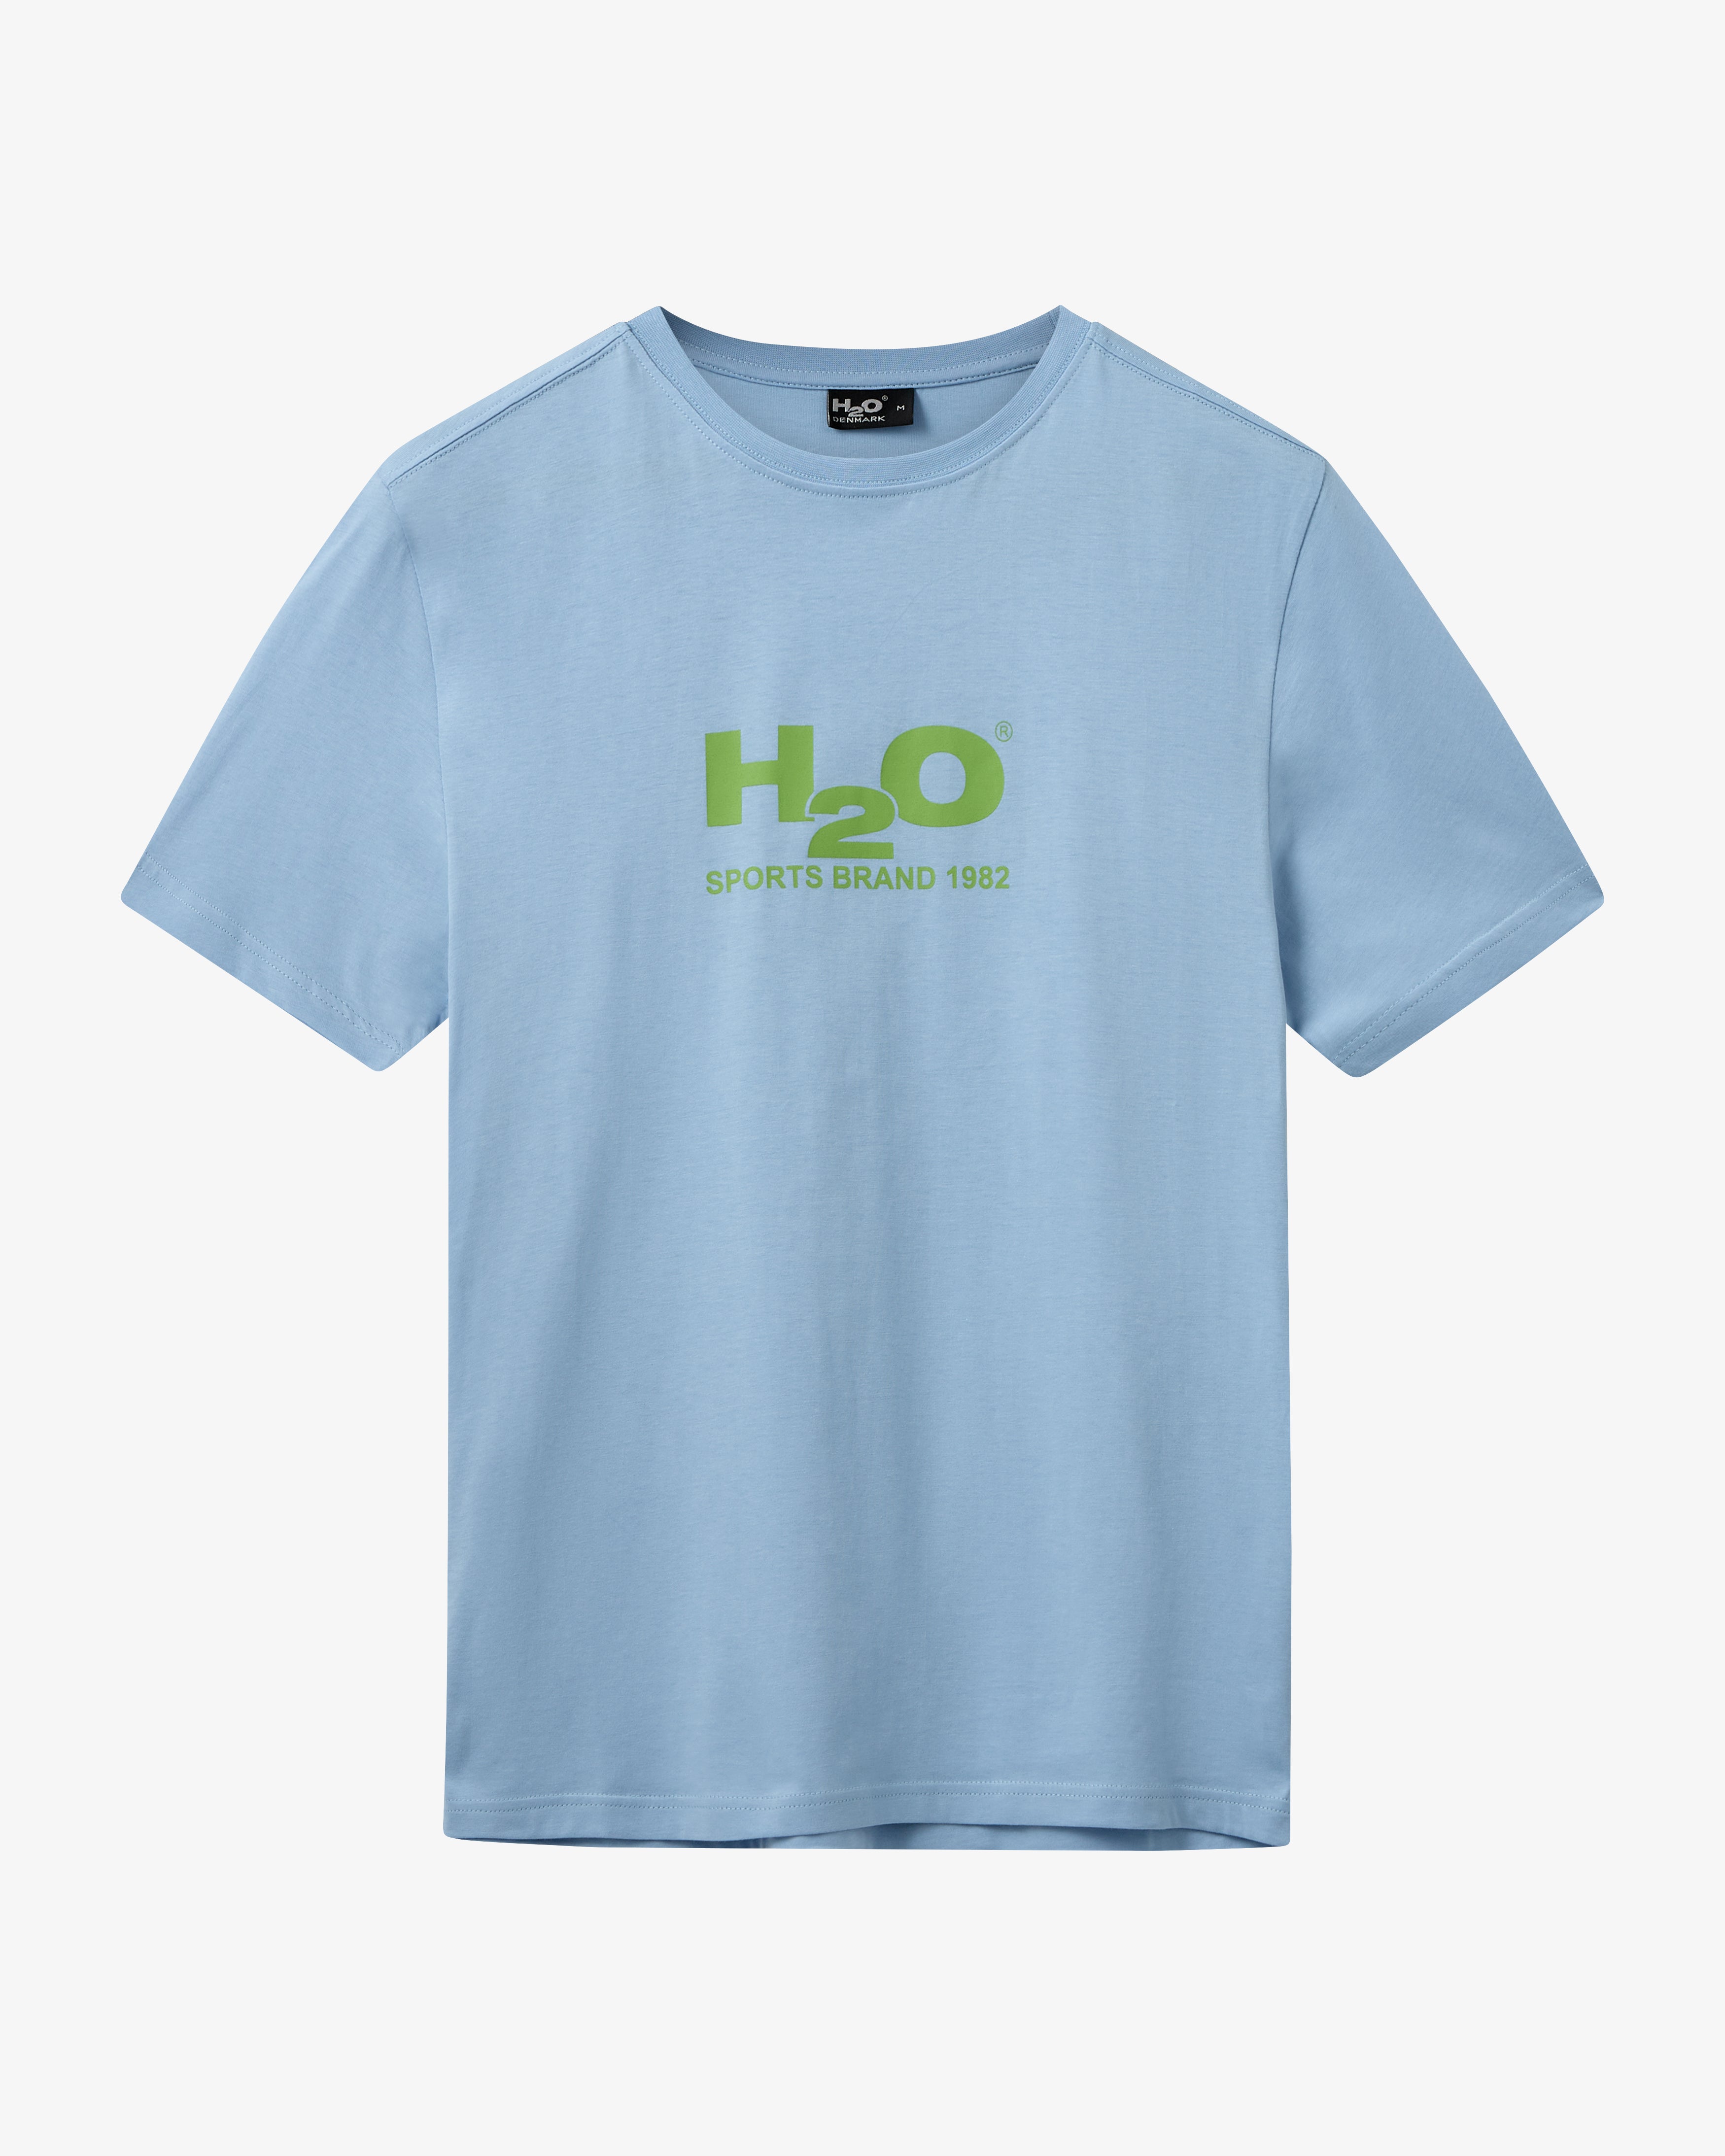 H2O Logo Tee - Baby Blue